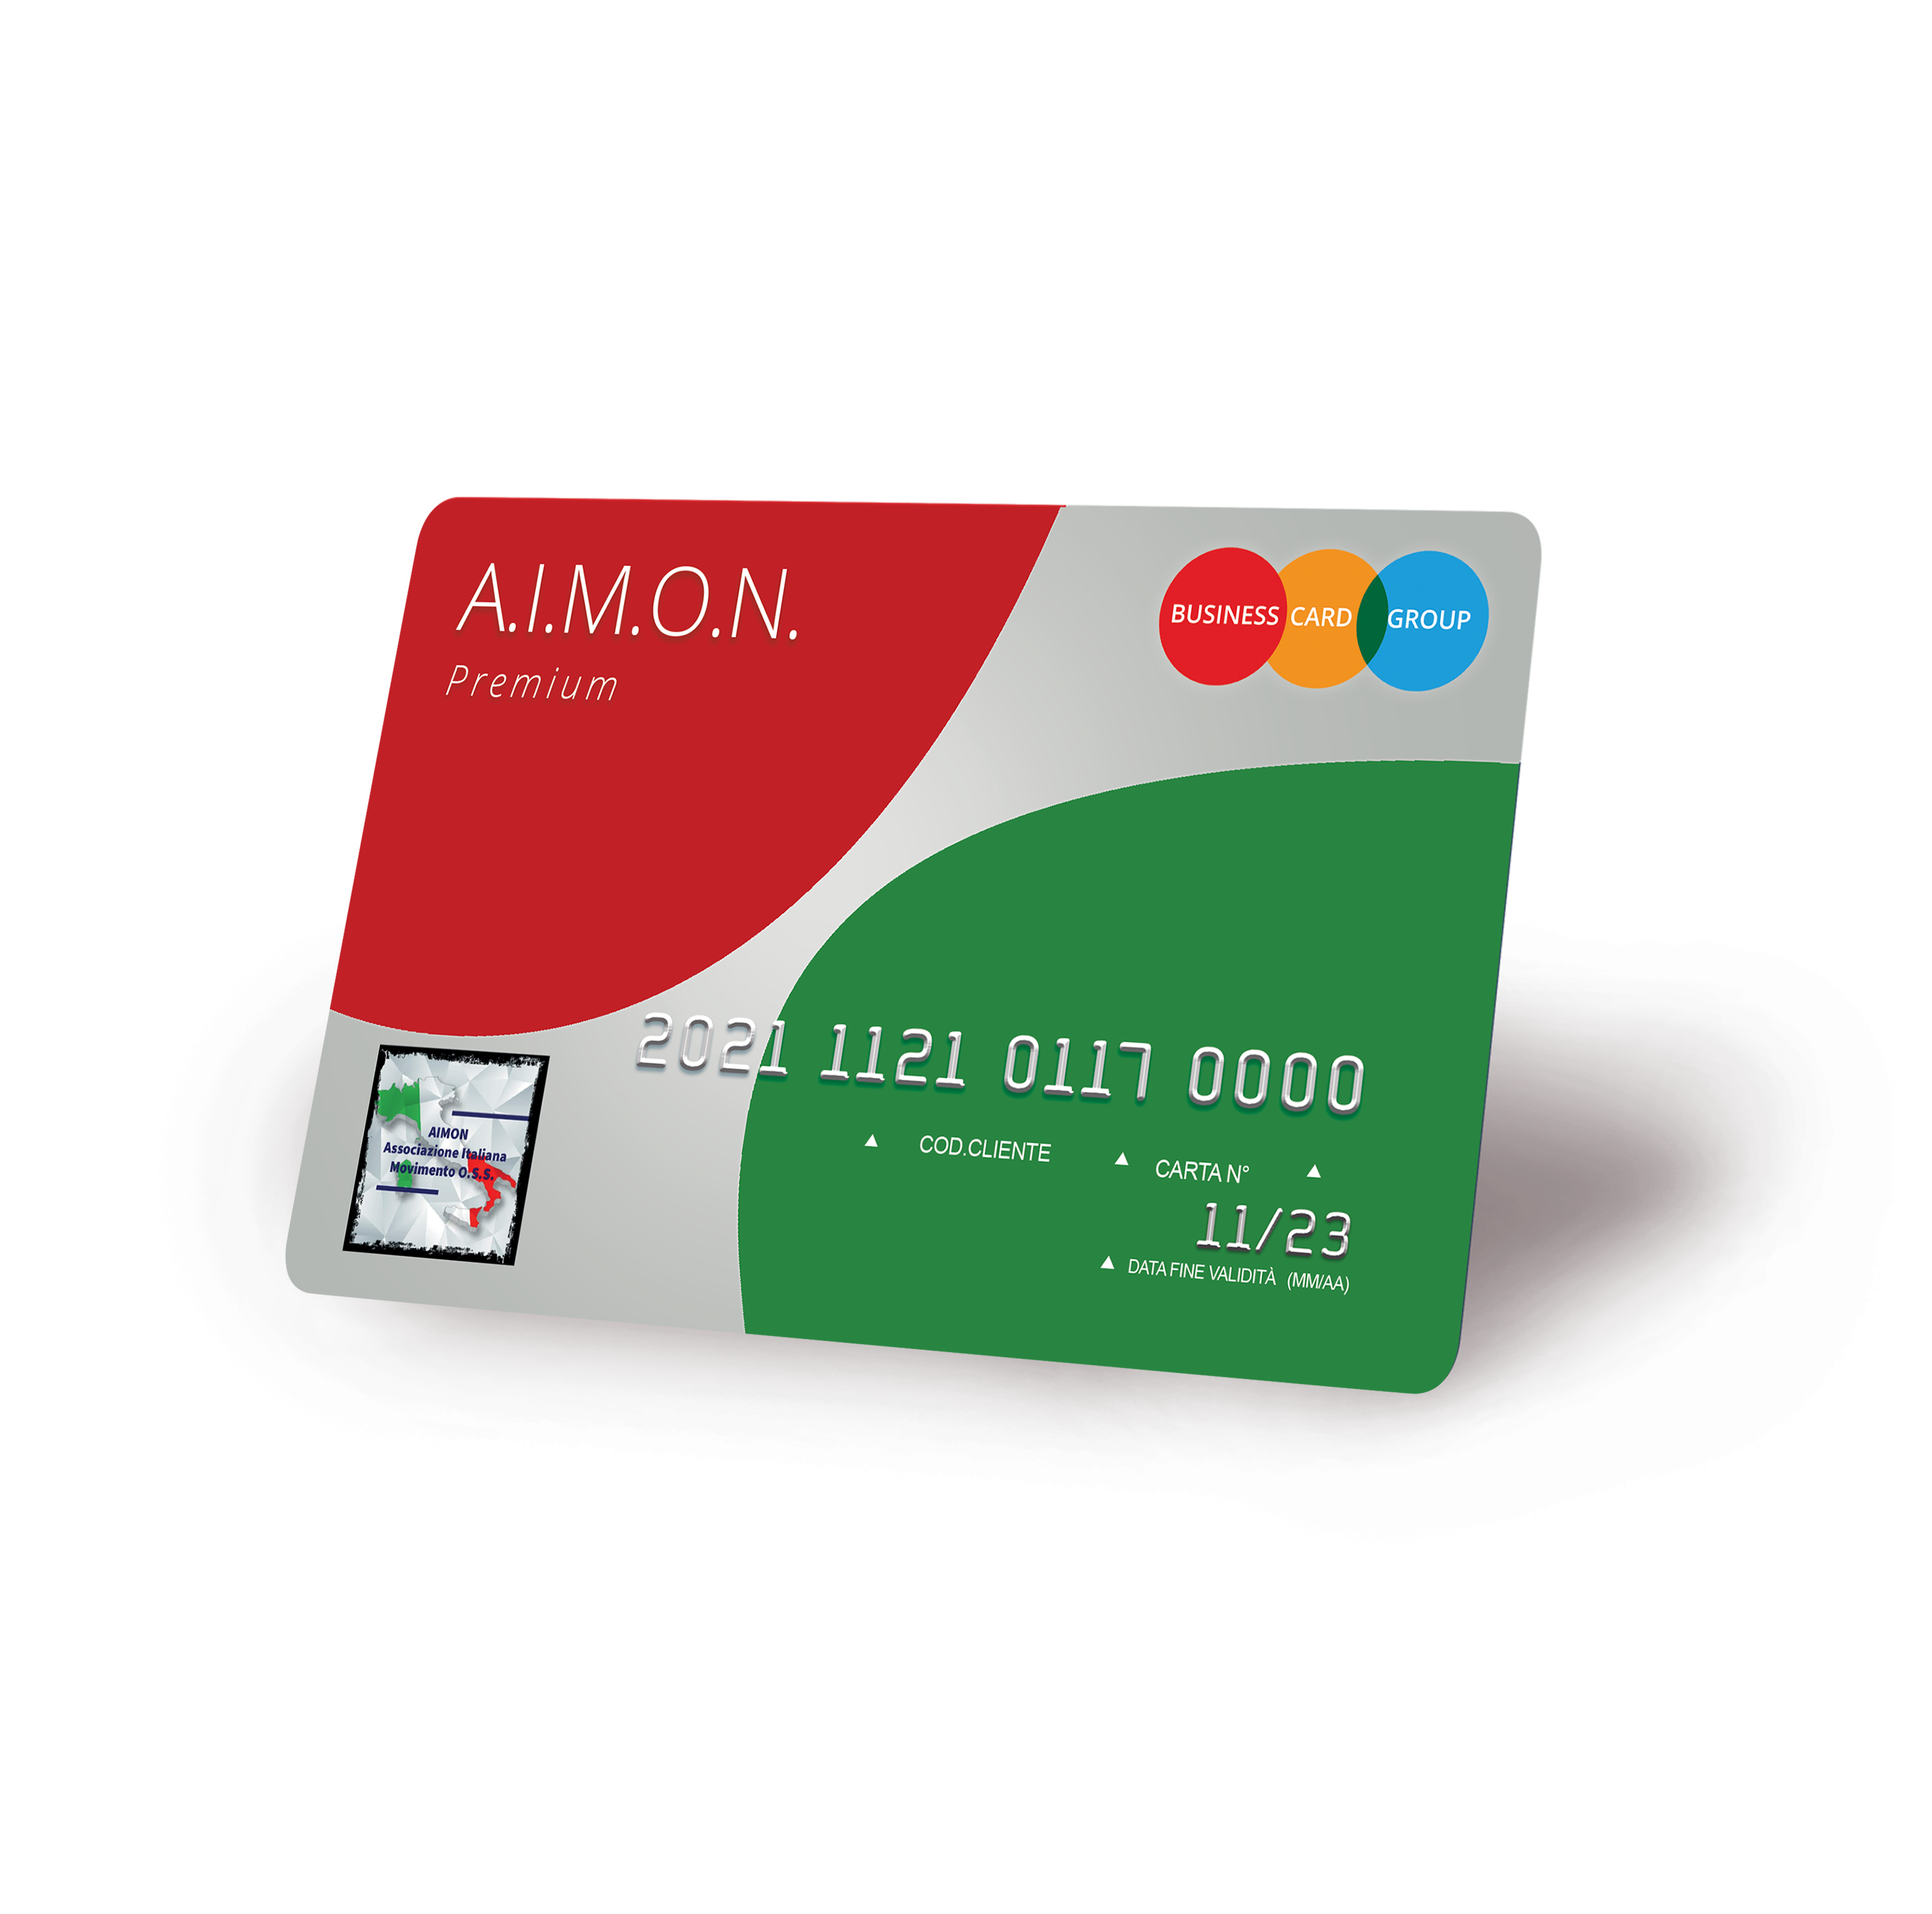 Business Card A.I.M.O.N. Premium